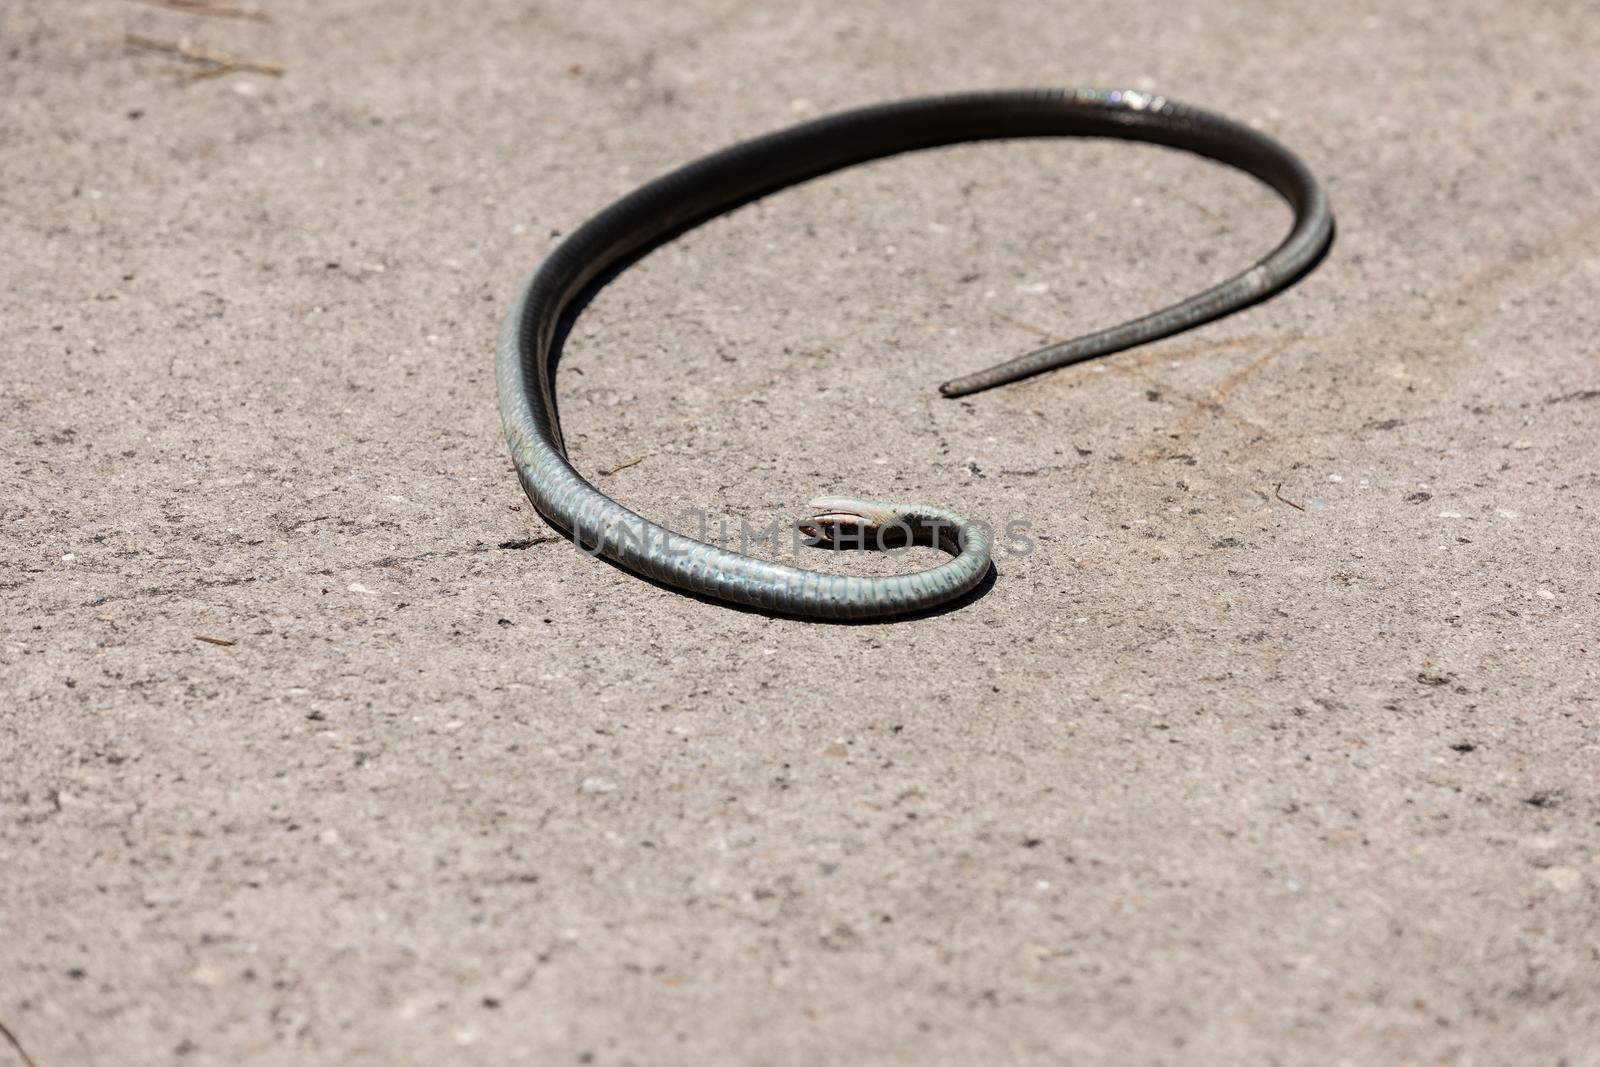 Dead black southern racer snake Coluber constrictor priapus  by steffstarr